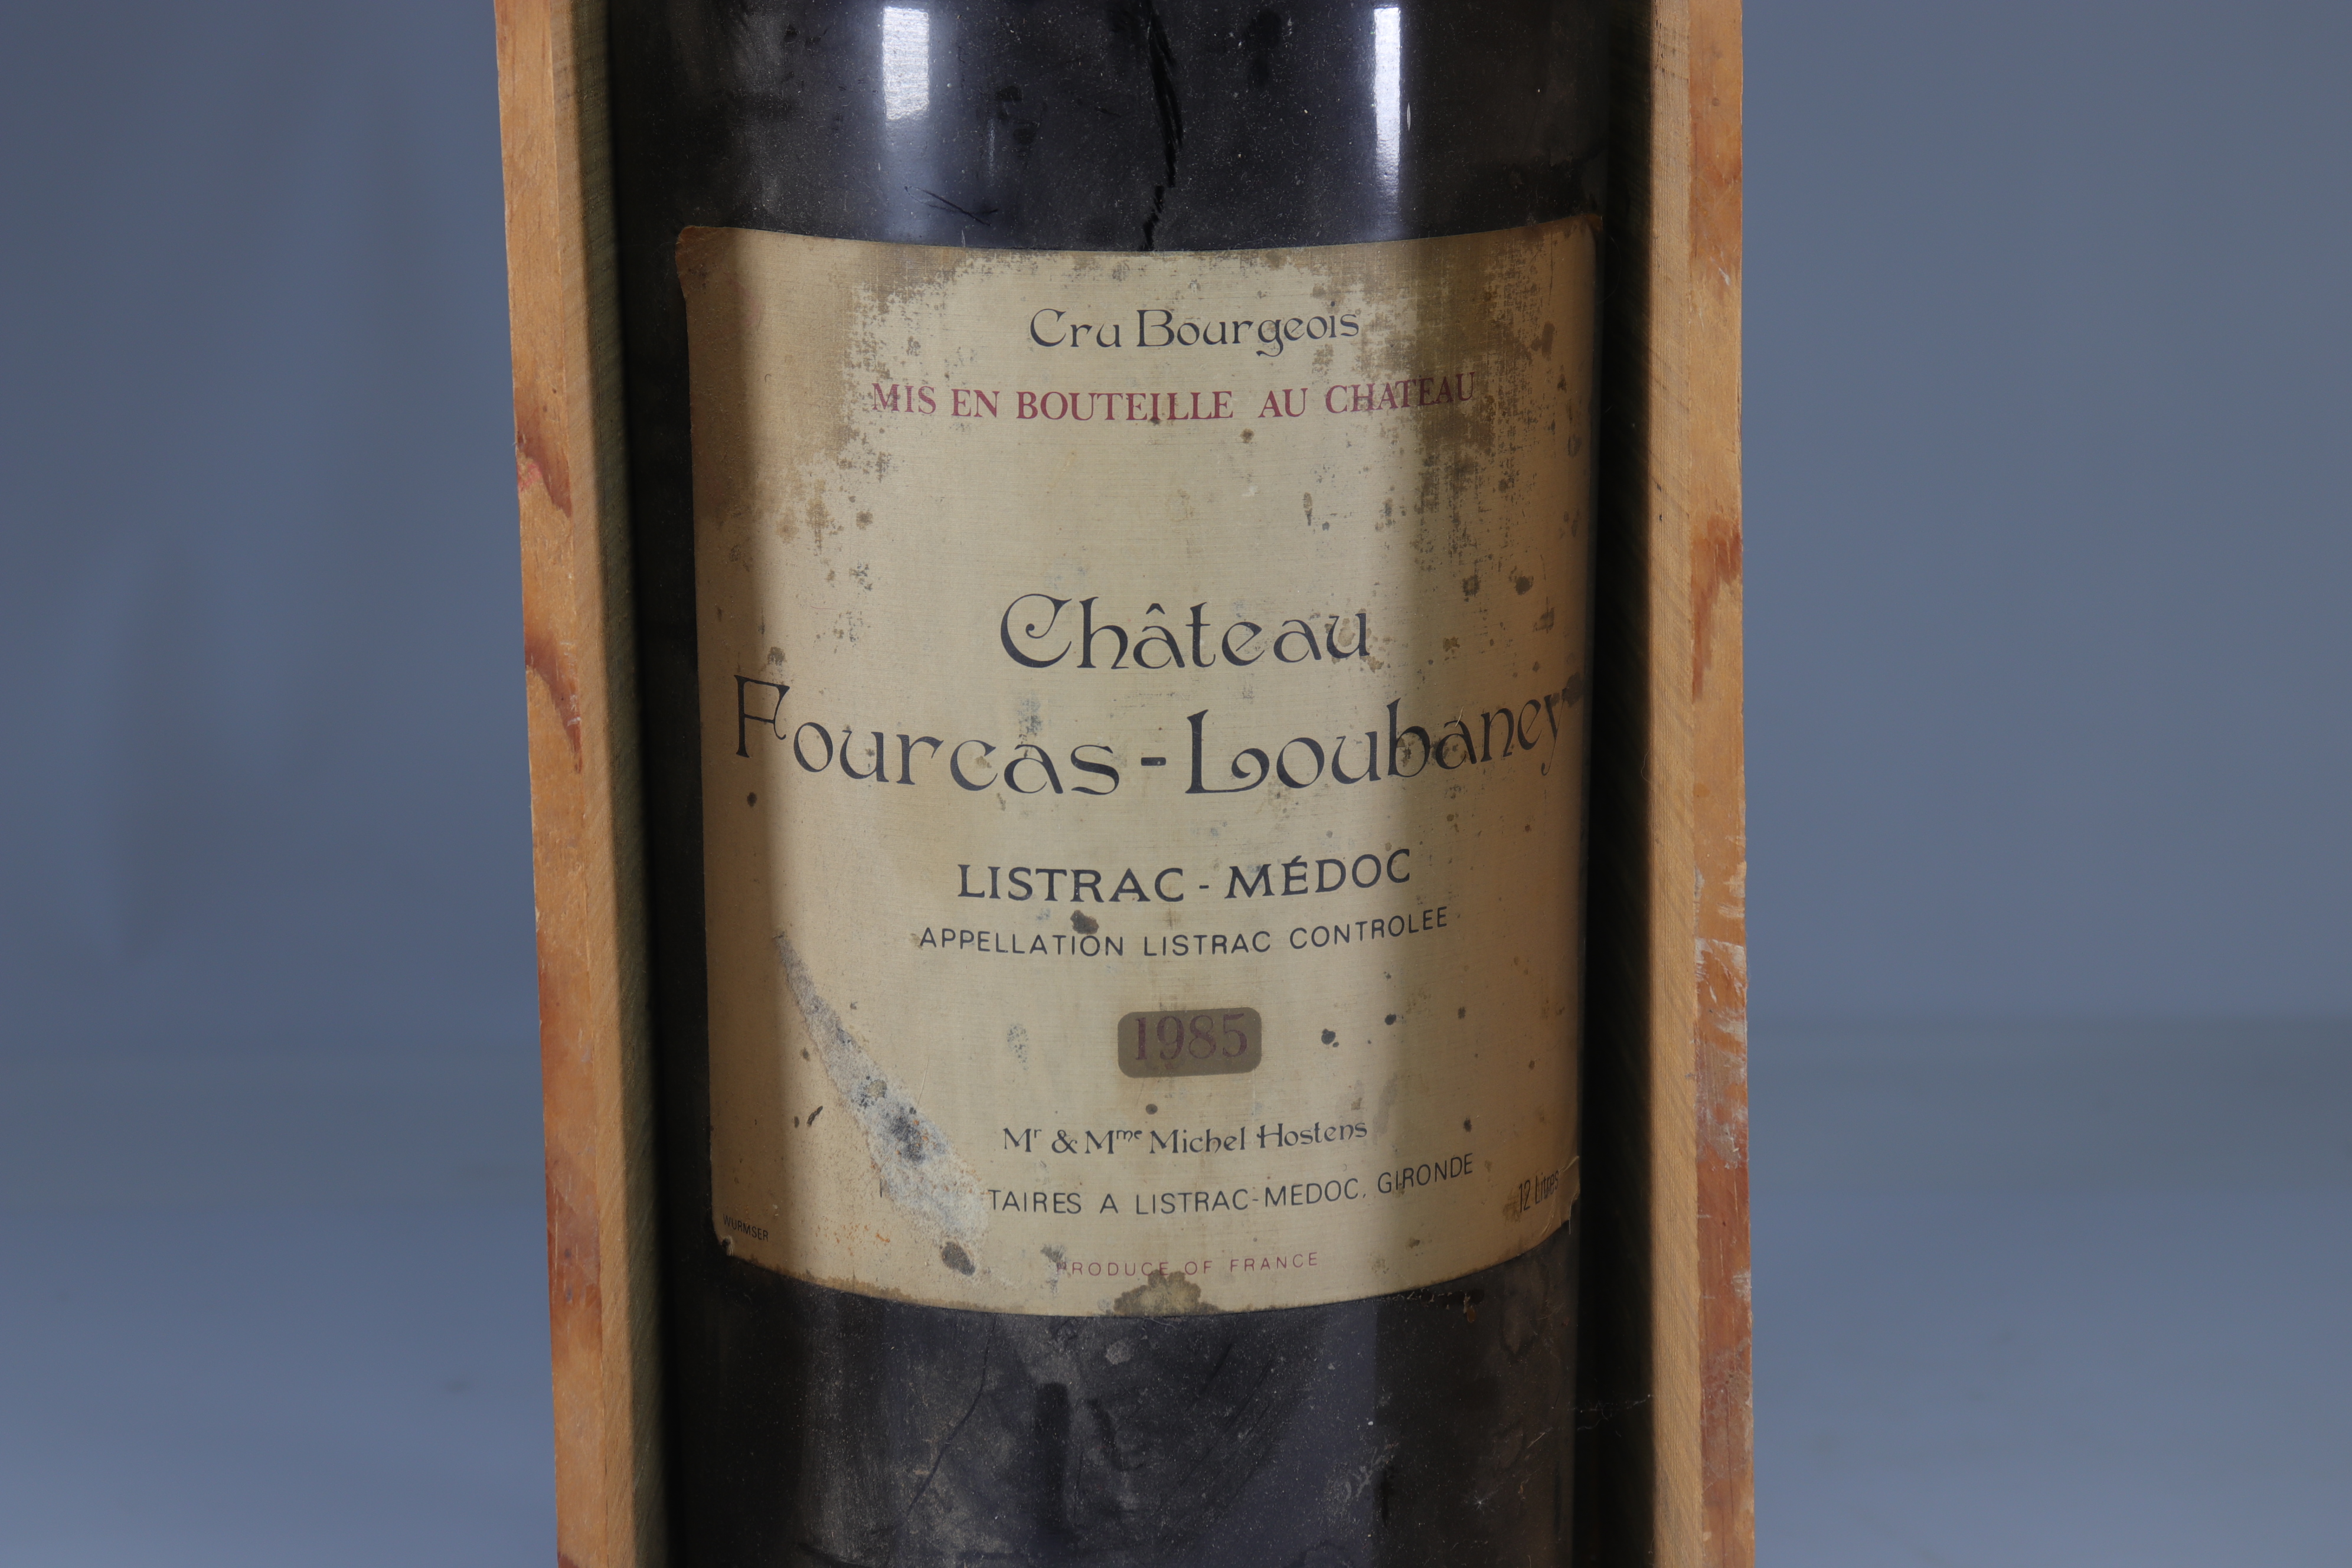 Bottle "Balthazar" Medoc fourcas-loubaney from 1985 - Image 2 of 2